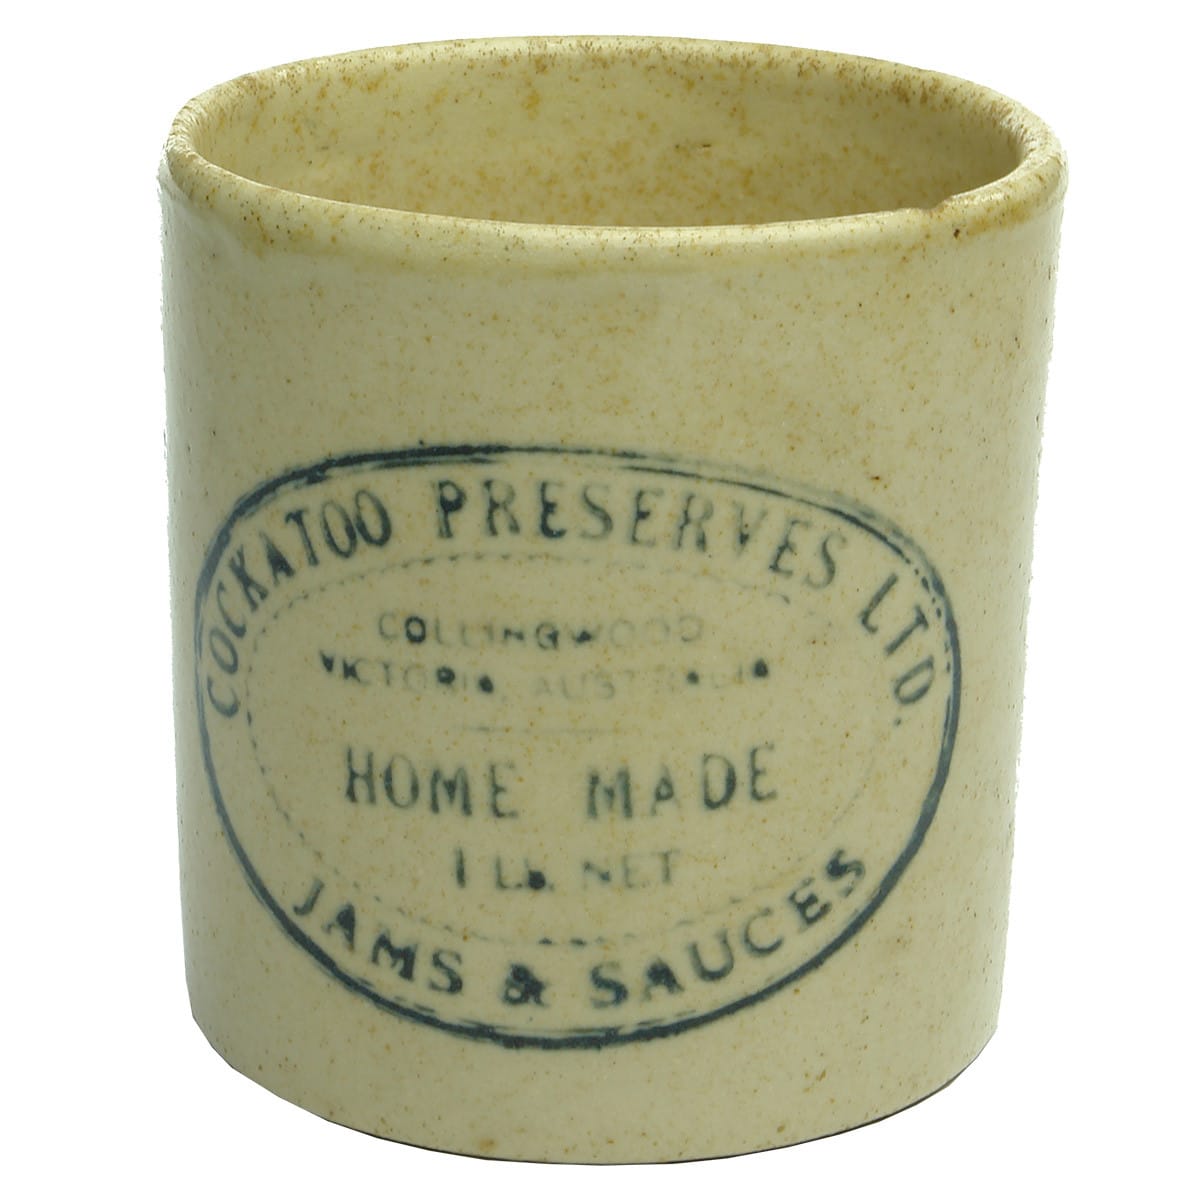 Stoneware Jam Jar. Cockatoo Preserves Ltd., Collingwood. 1 Lb. (Victoria)